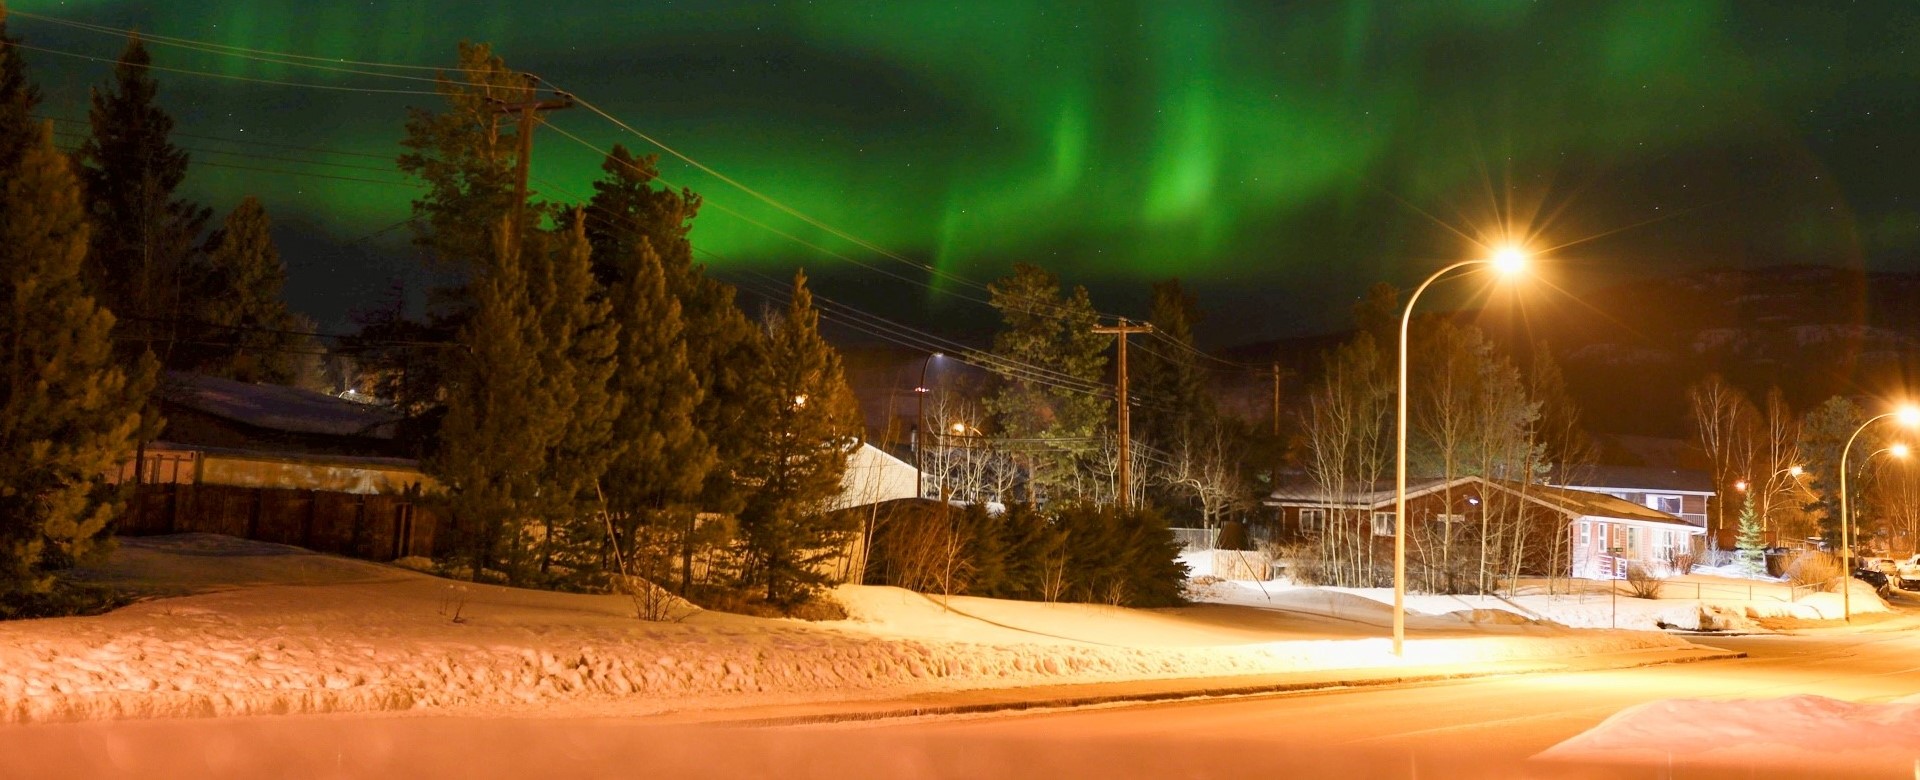 Aurora borealis over neighbourhood in Whitehorse, Yukon